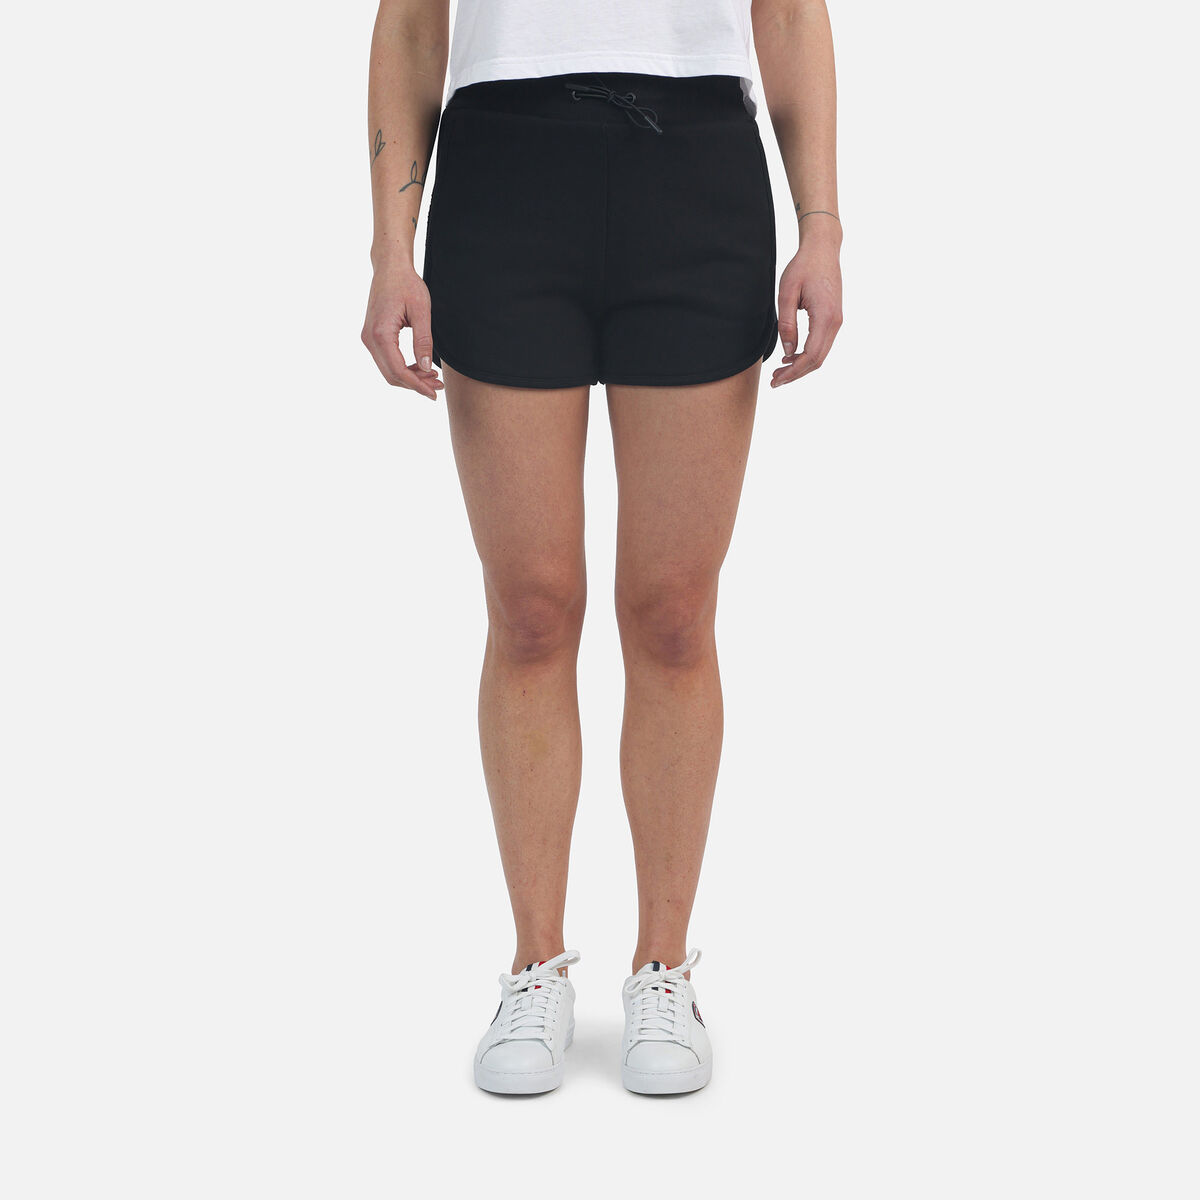 Women's cotton comfortable shorts